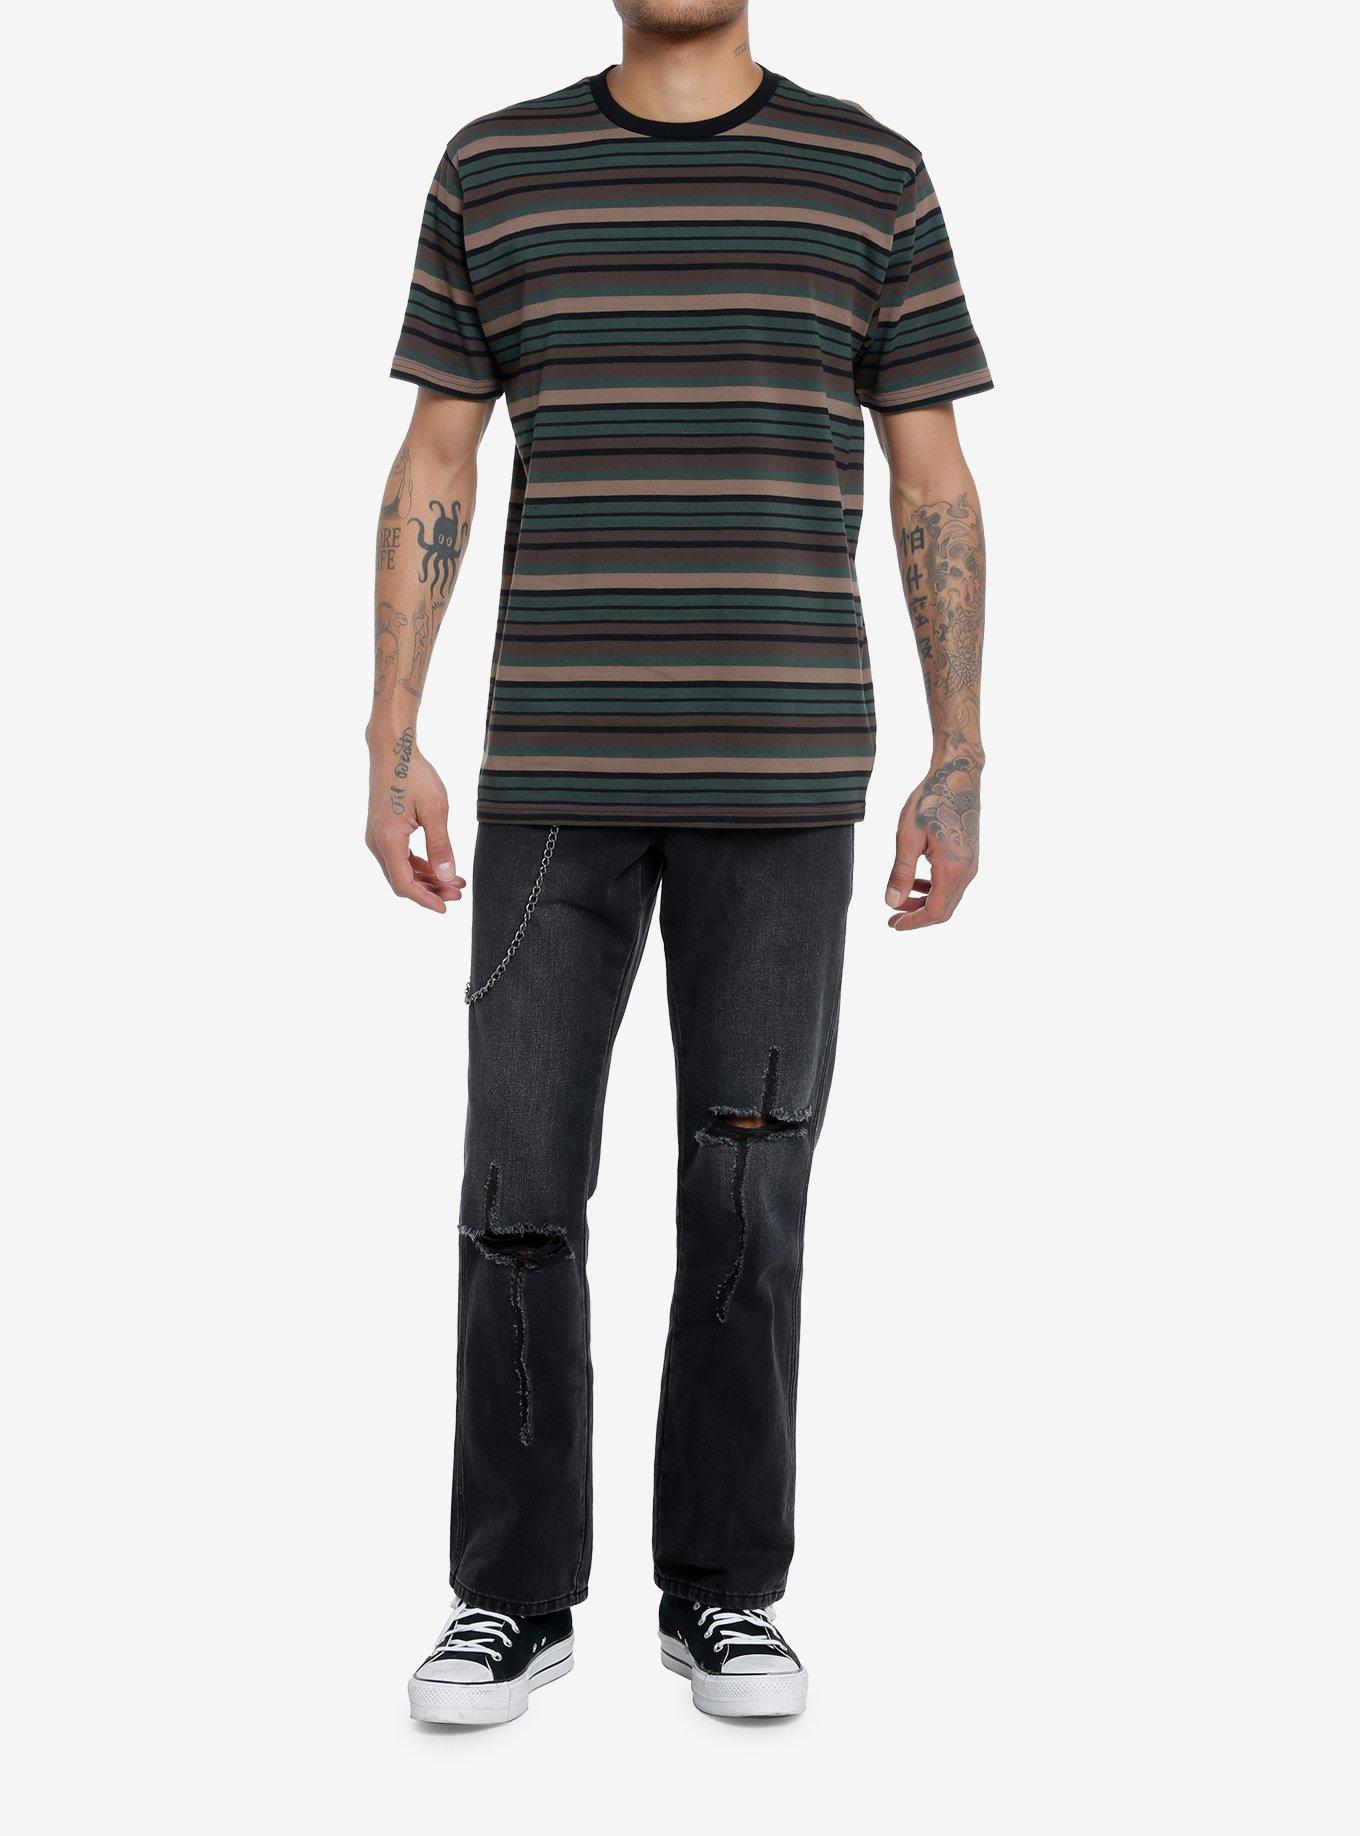 Thorn & Fable Brown & Dark Green Stripe T-Shirt, BROWN, alternate